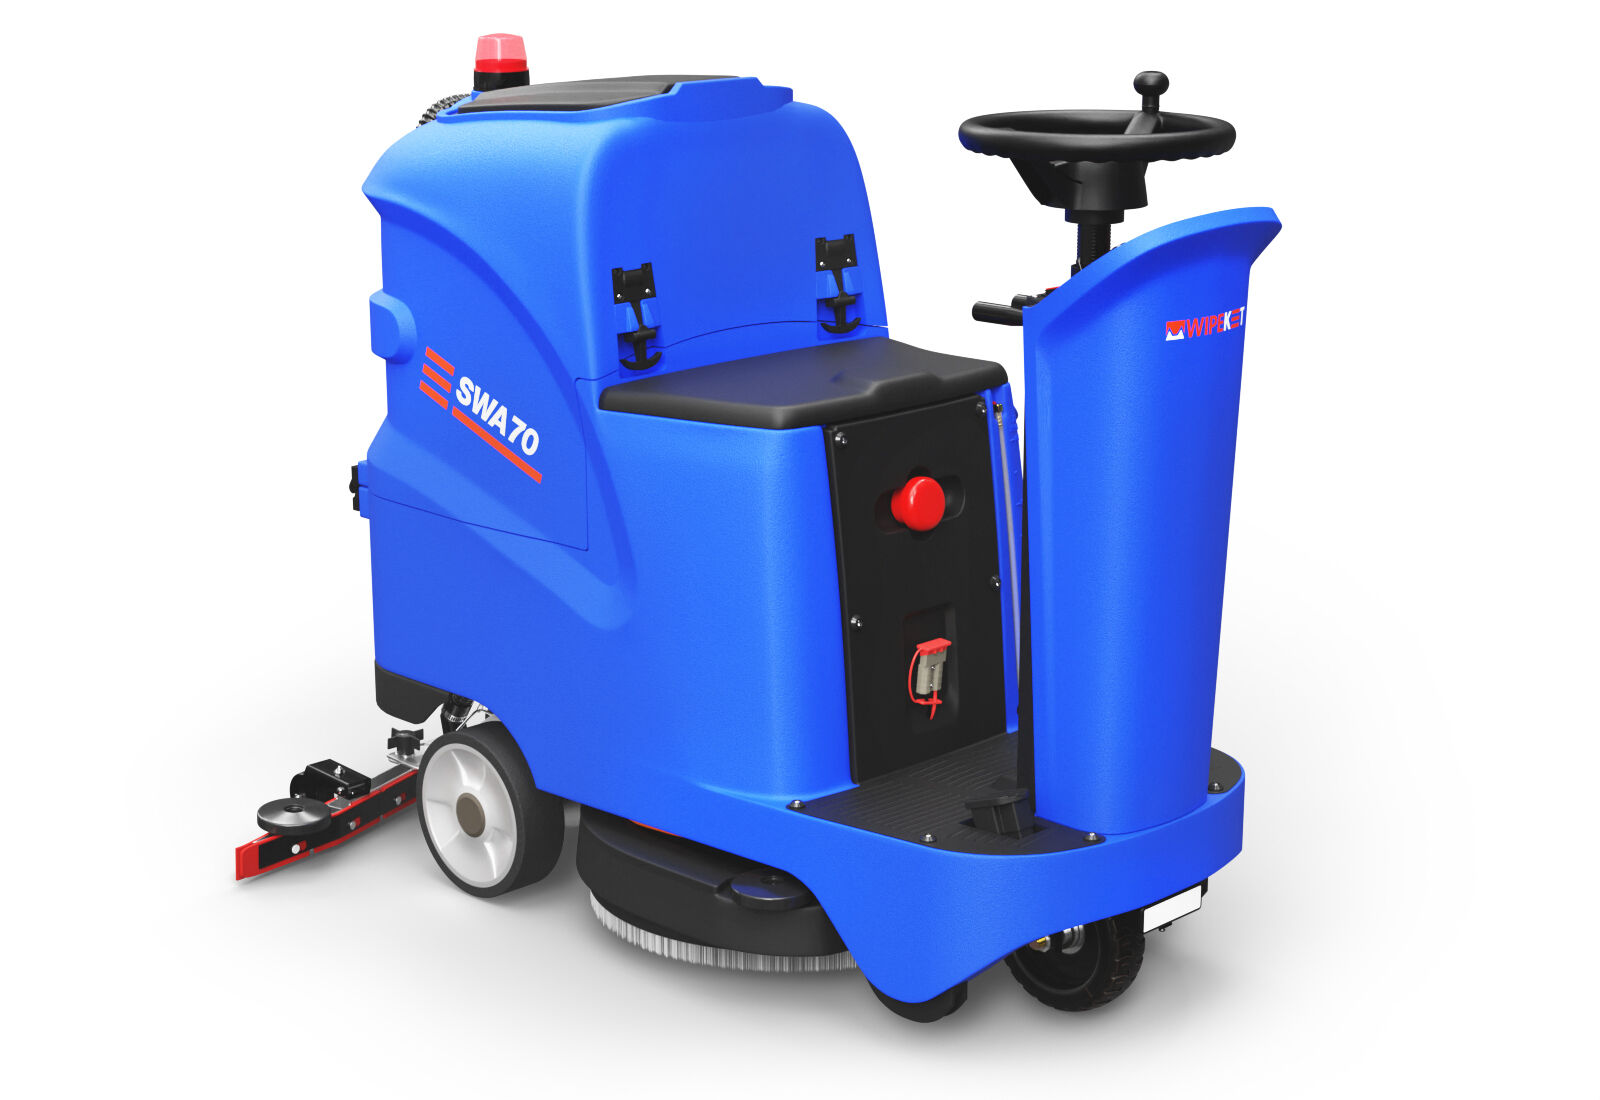 Ride-on scrubber dryer SWA70, 35,521 ft²/h, brush diameter 22.05 in, wipeket